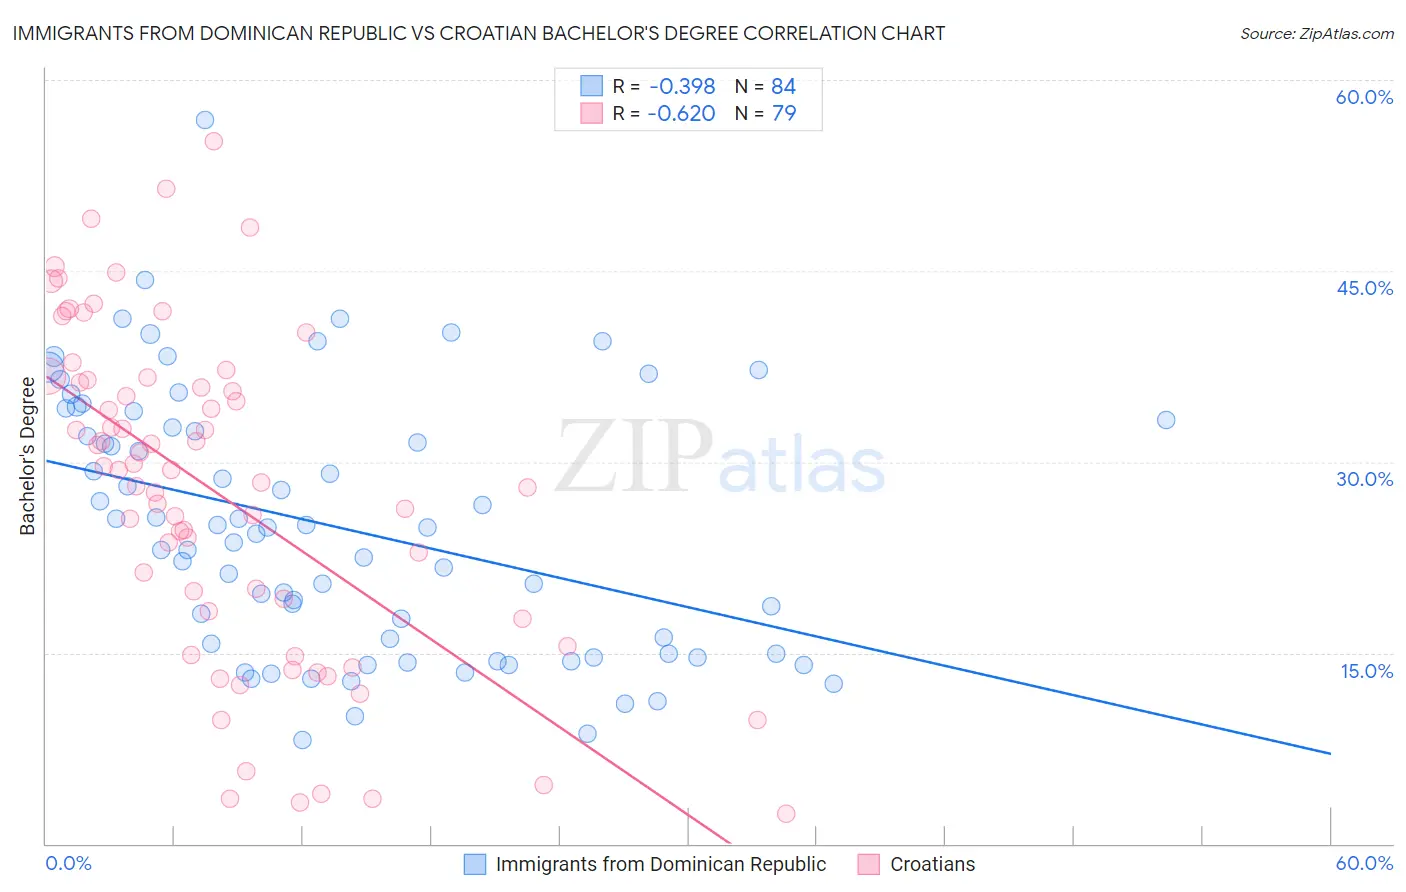 Immigrants from Dominican Republic vs Croatian Bachelor's Degree